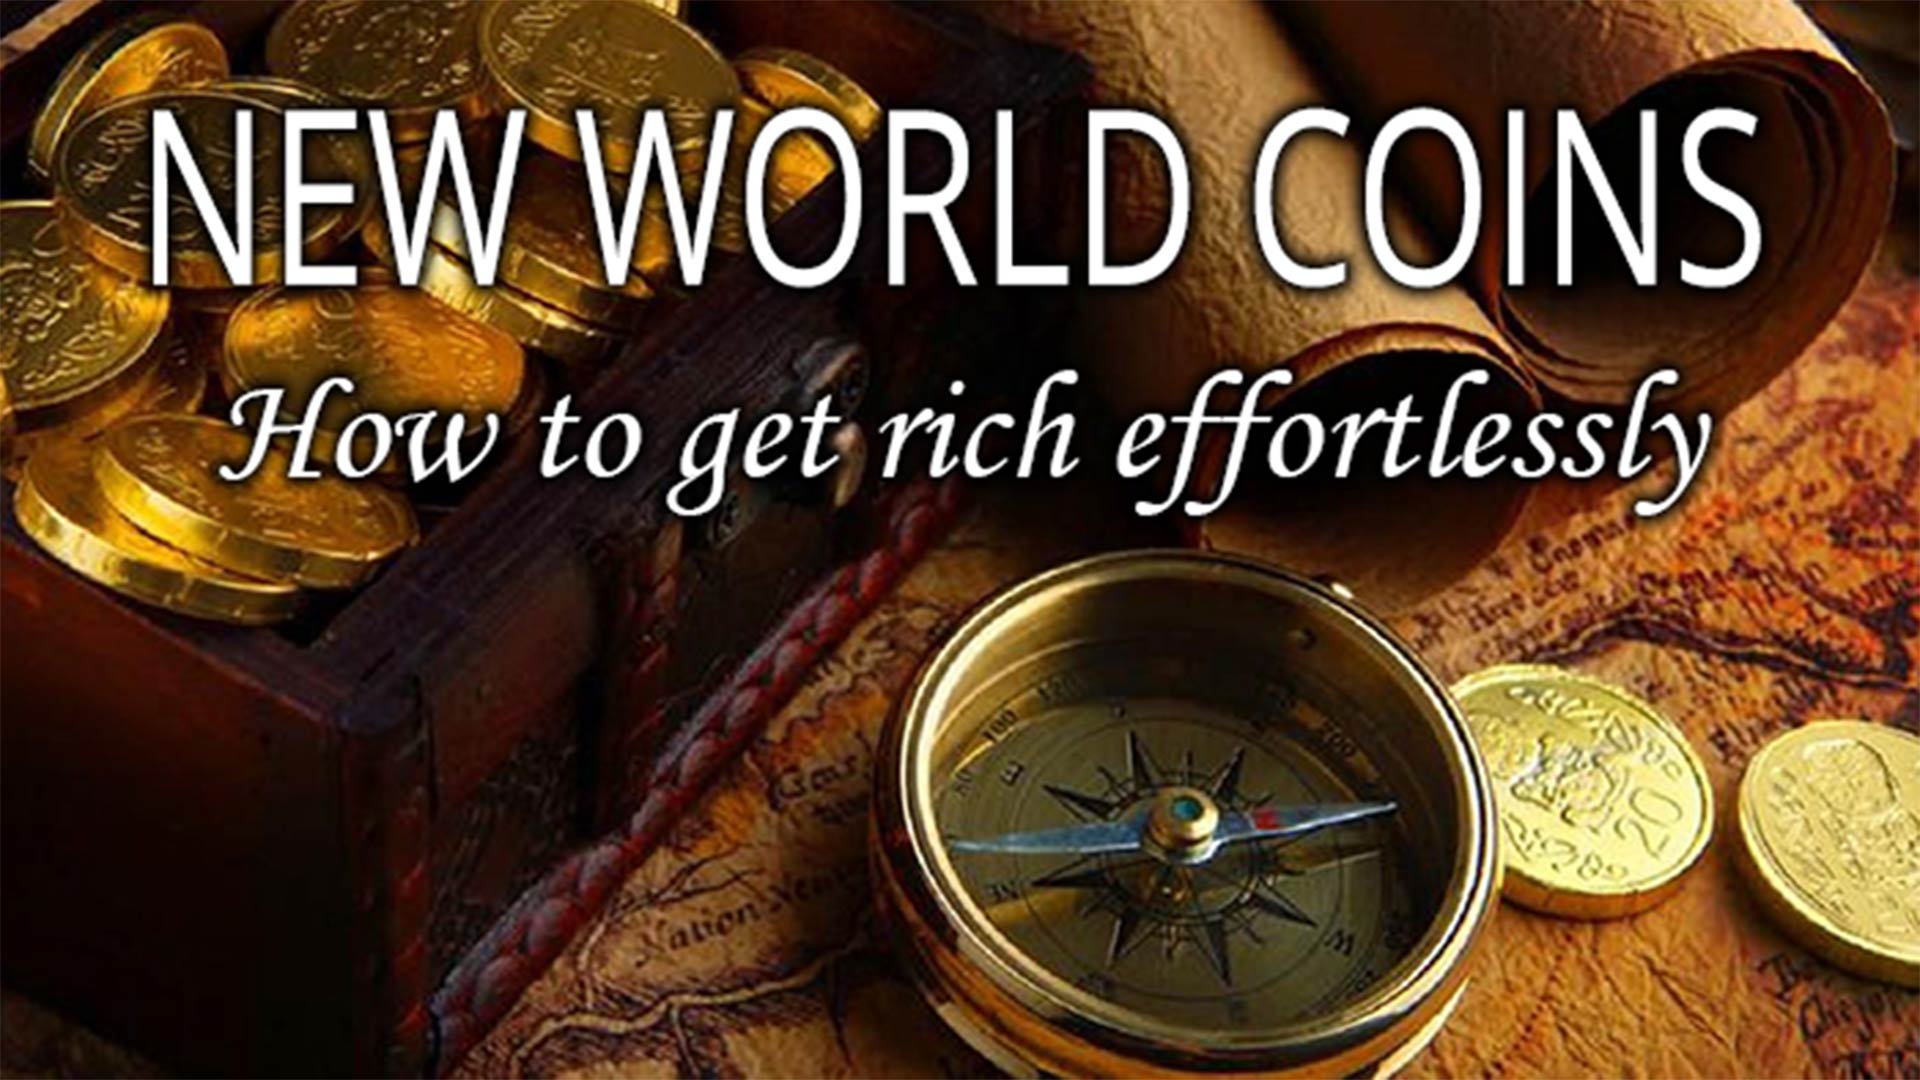 New World Money Making guide